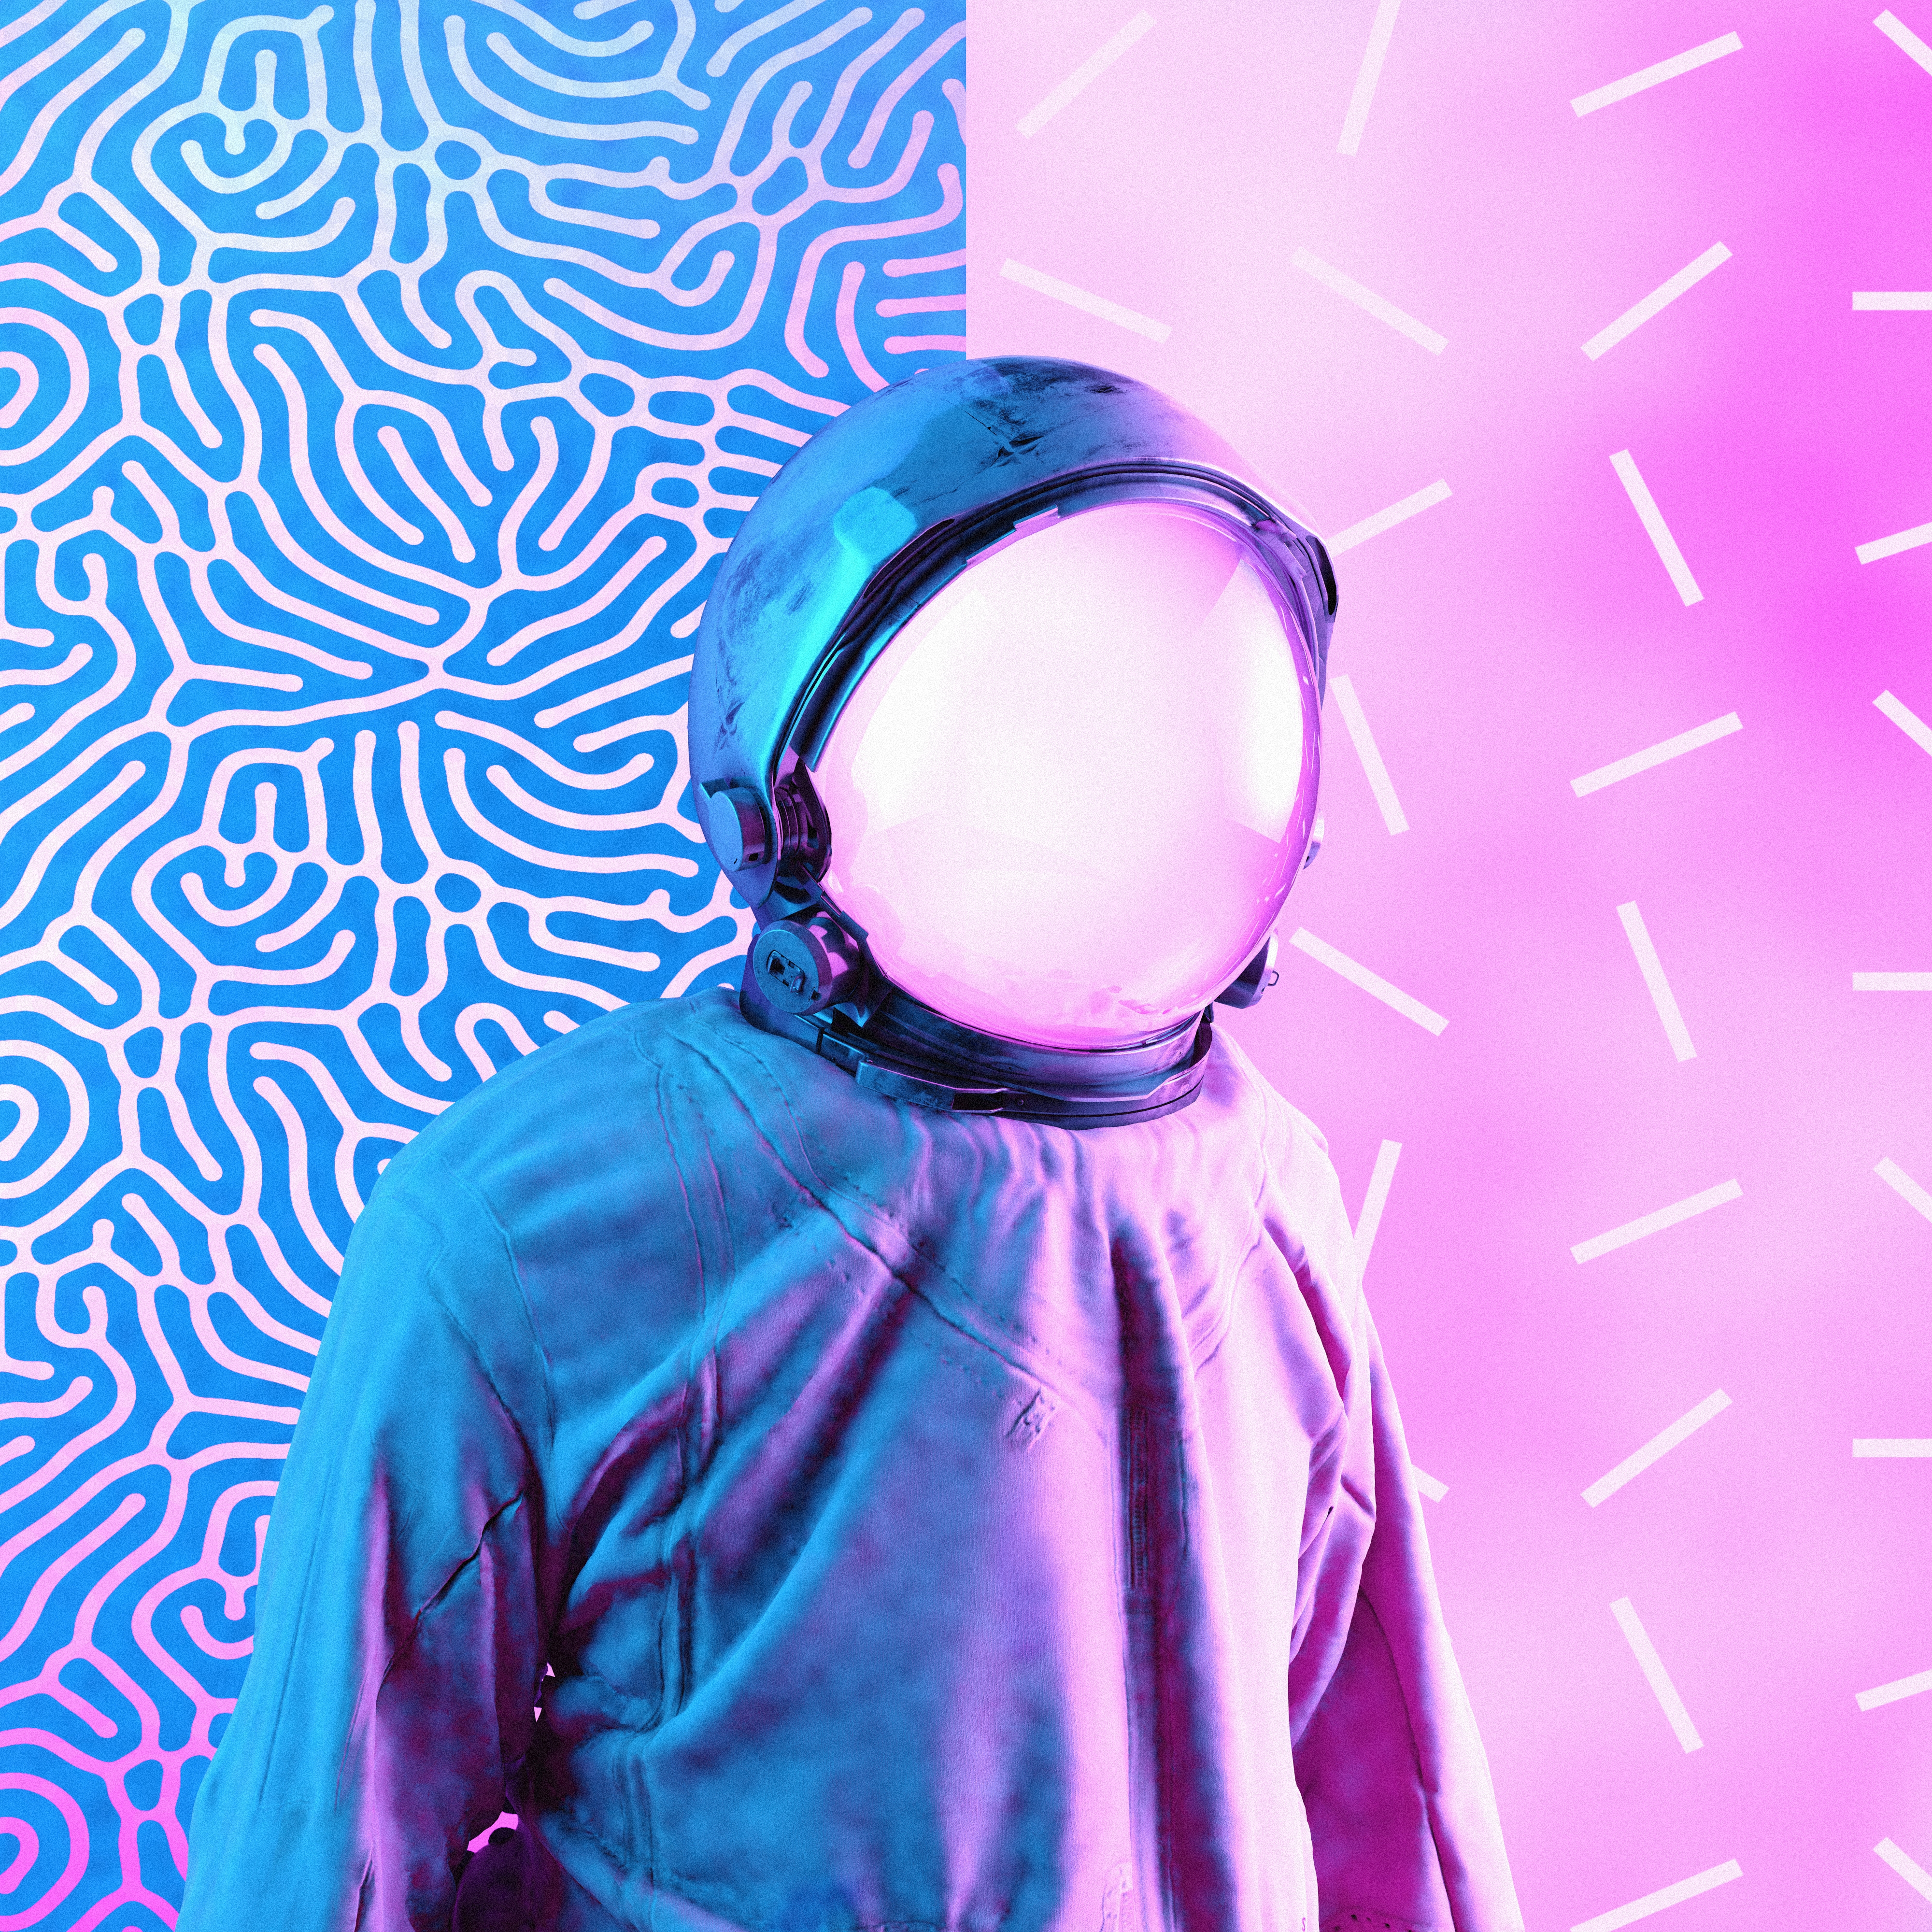 HD wallpaper, Space Suit, Experiment, Pink Background, Faceless, Cgi, Vaporwave